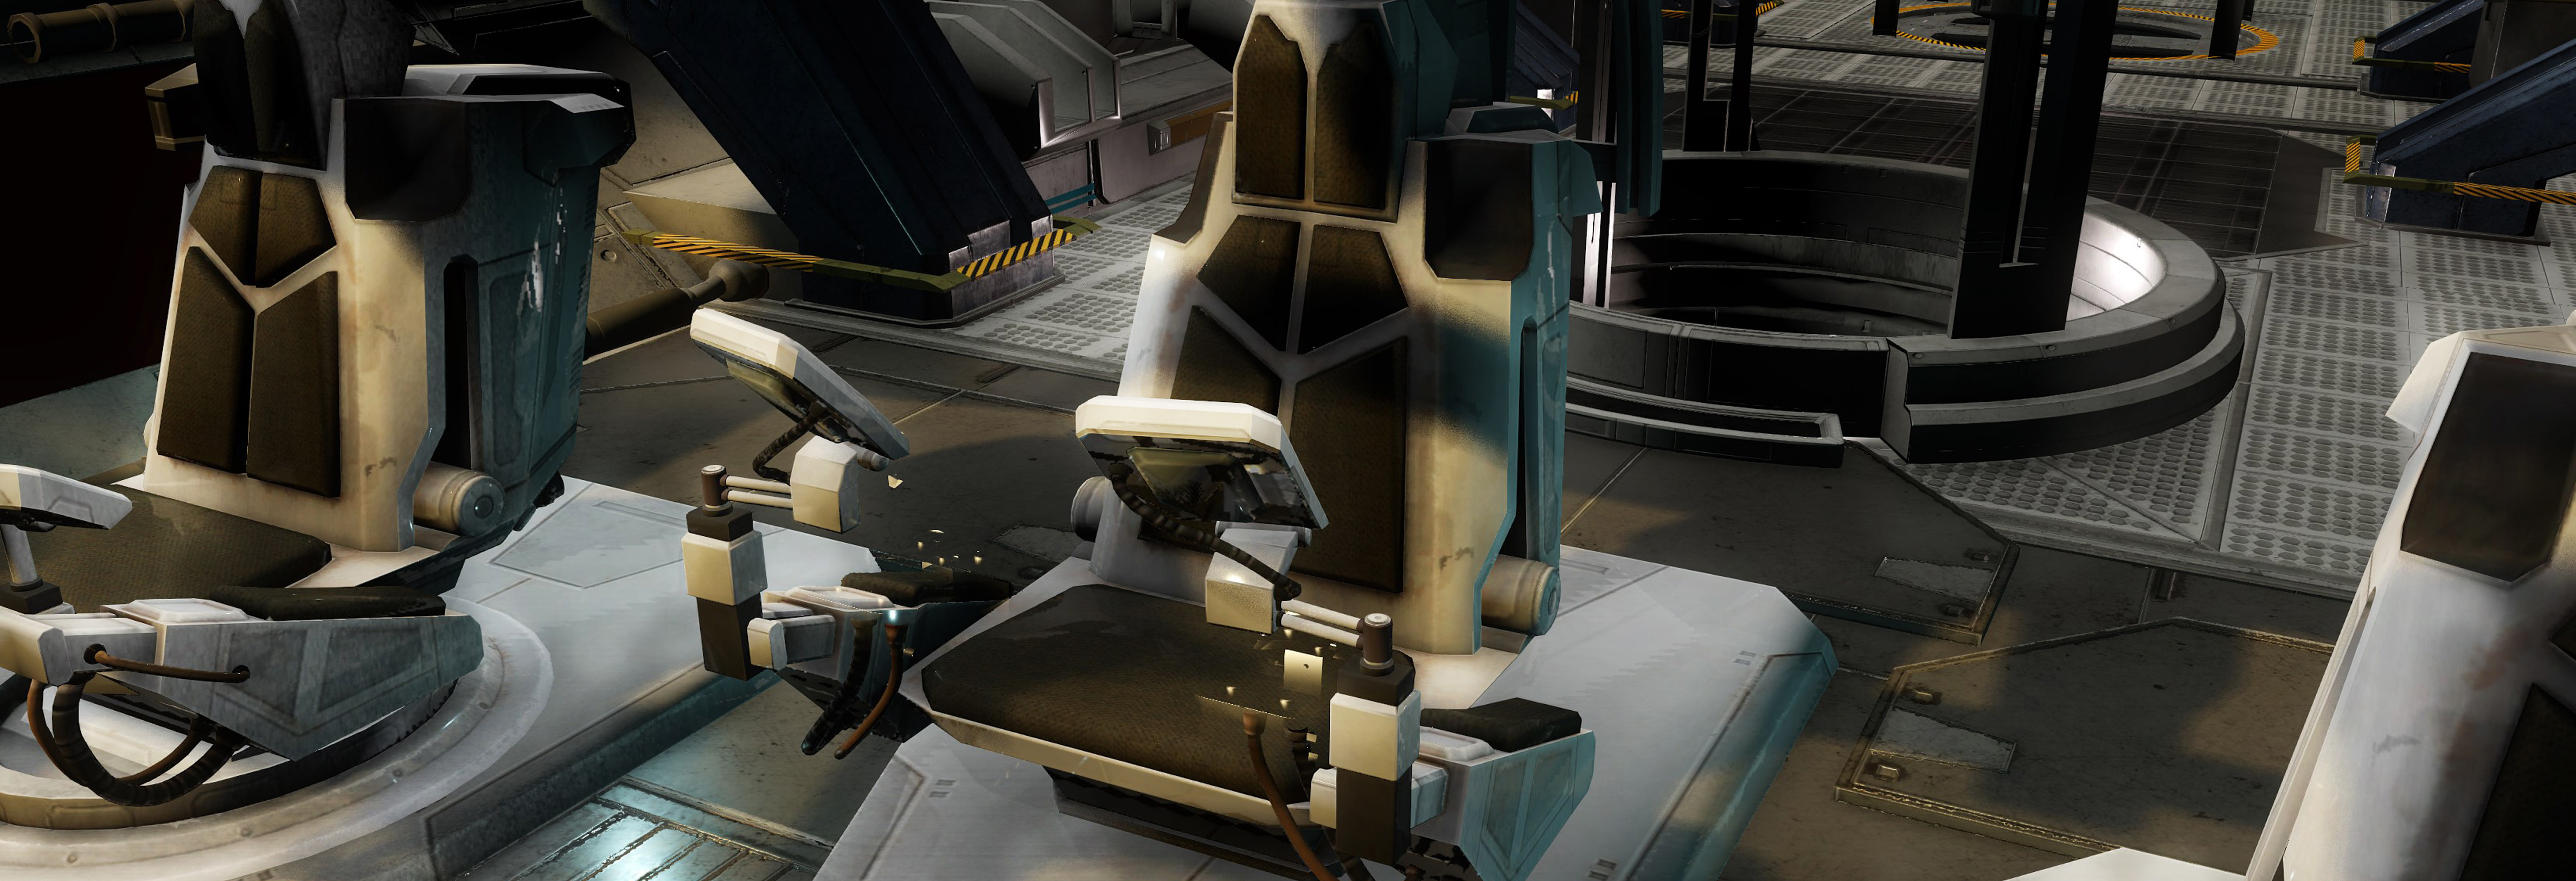 Datei:Constellation Aquila cockpit.jpg